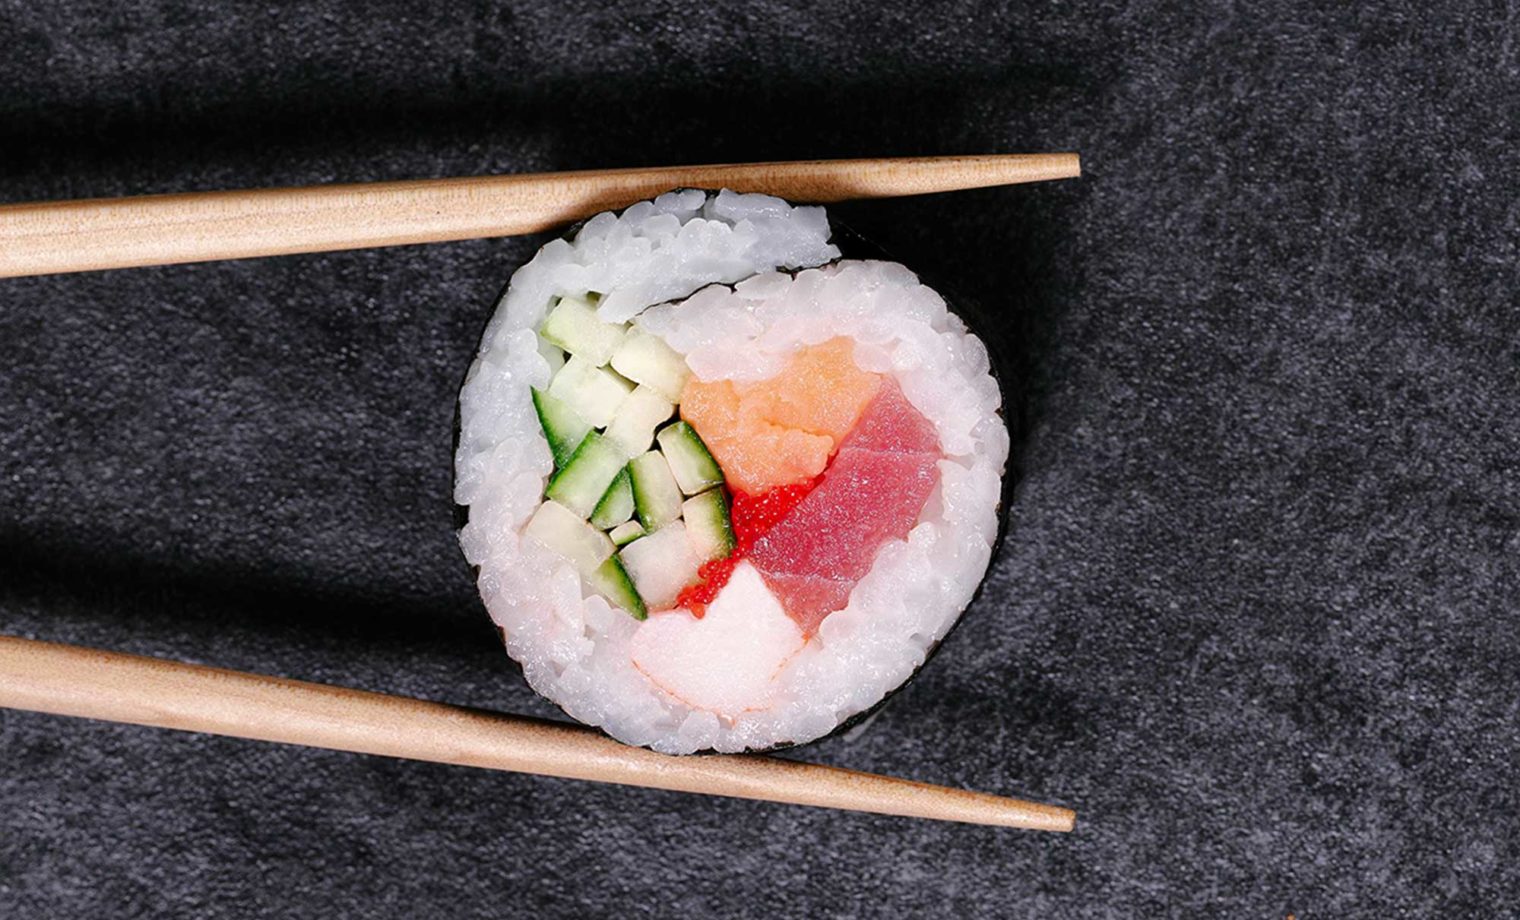 ovrgrnd-social-media-influencer-agency-montreal-mito-sushi-maki-chopsticks